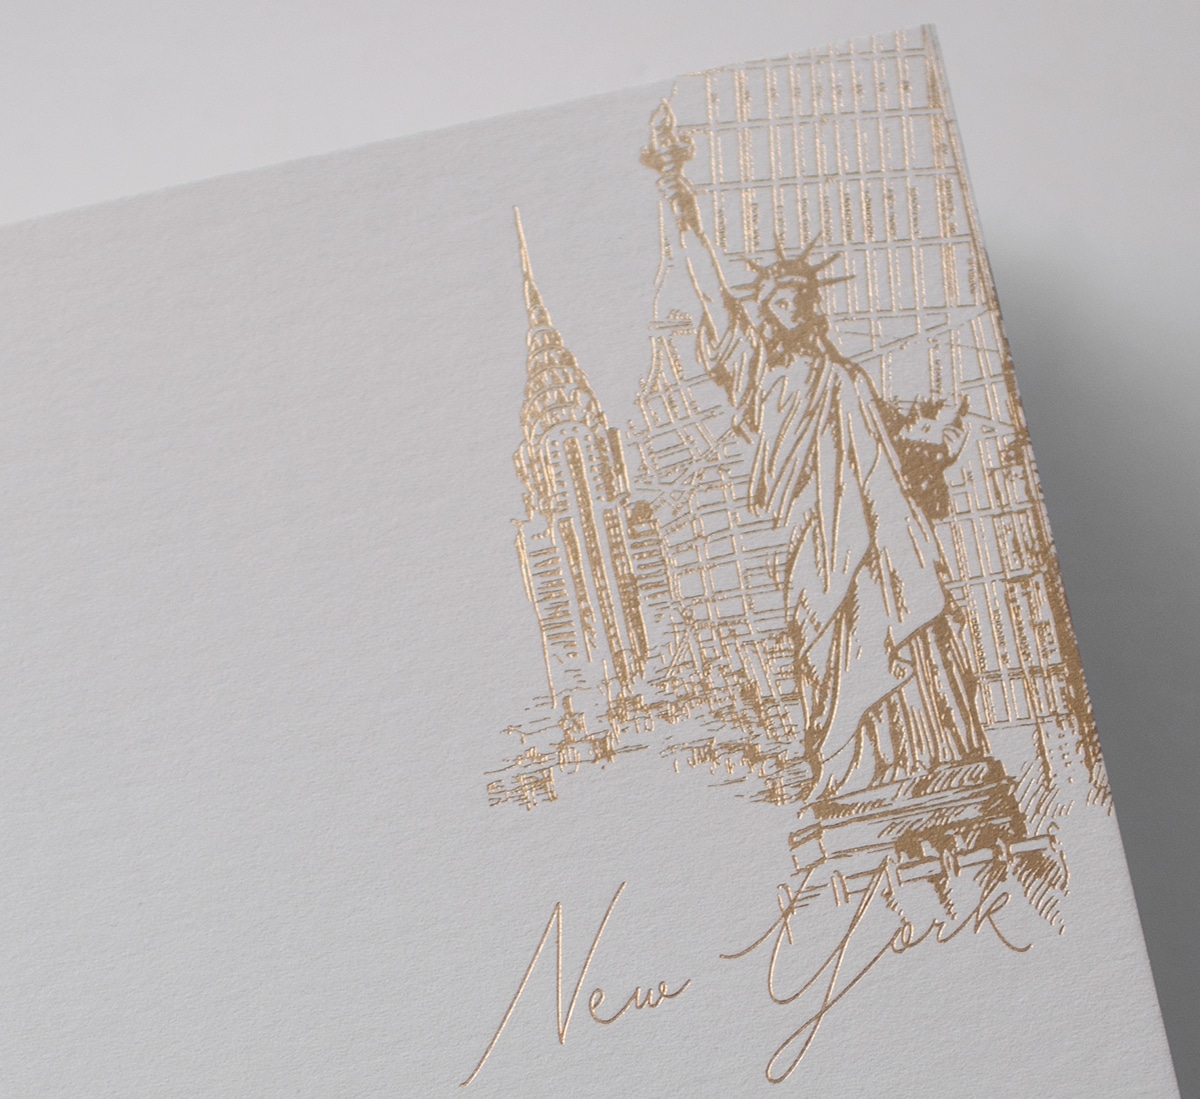 Gold foil with New York landmarks